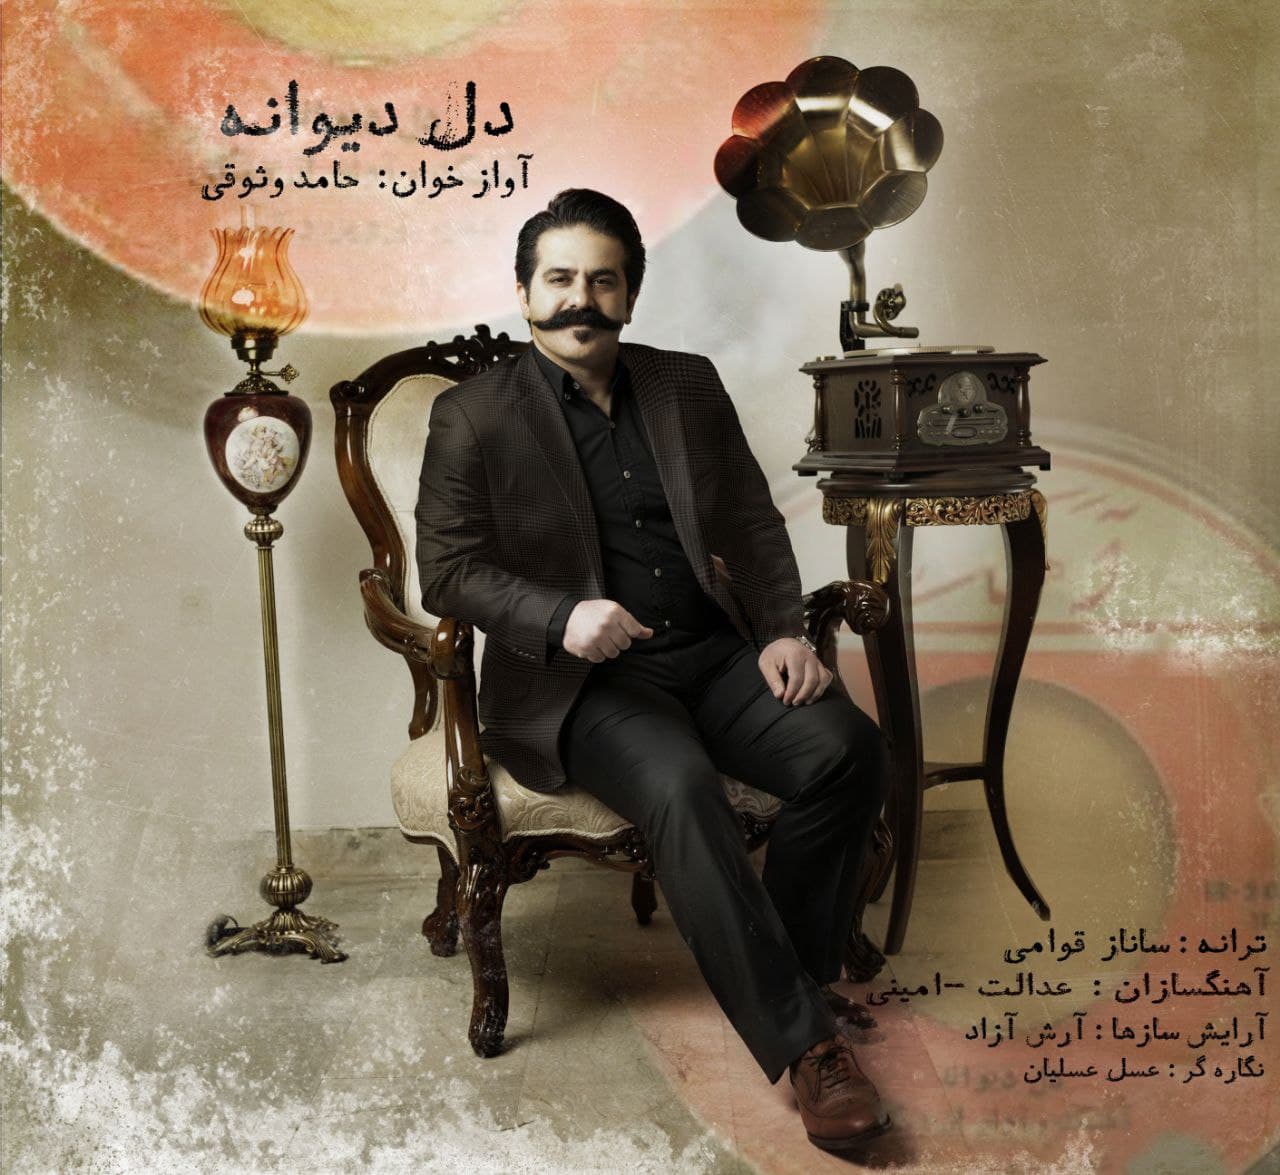  دانلود آهنگ جدید حامد وثوقی - دل دیوانه | Download New Music By Hamed Vosoughi  - Dele Divaneh